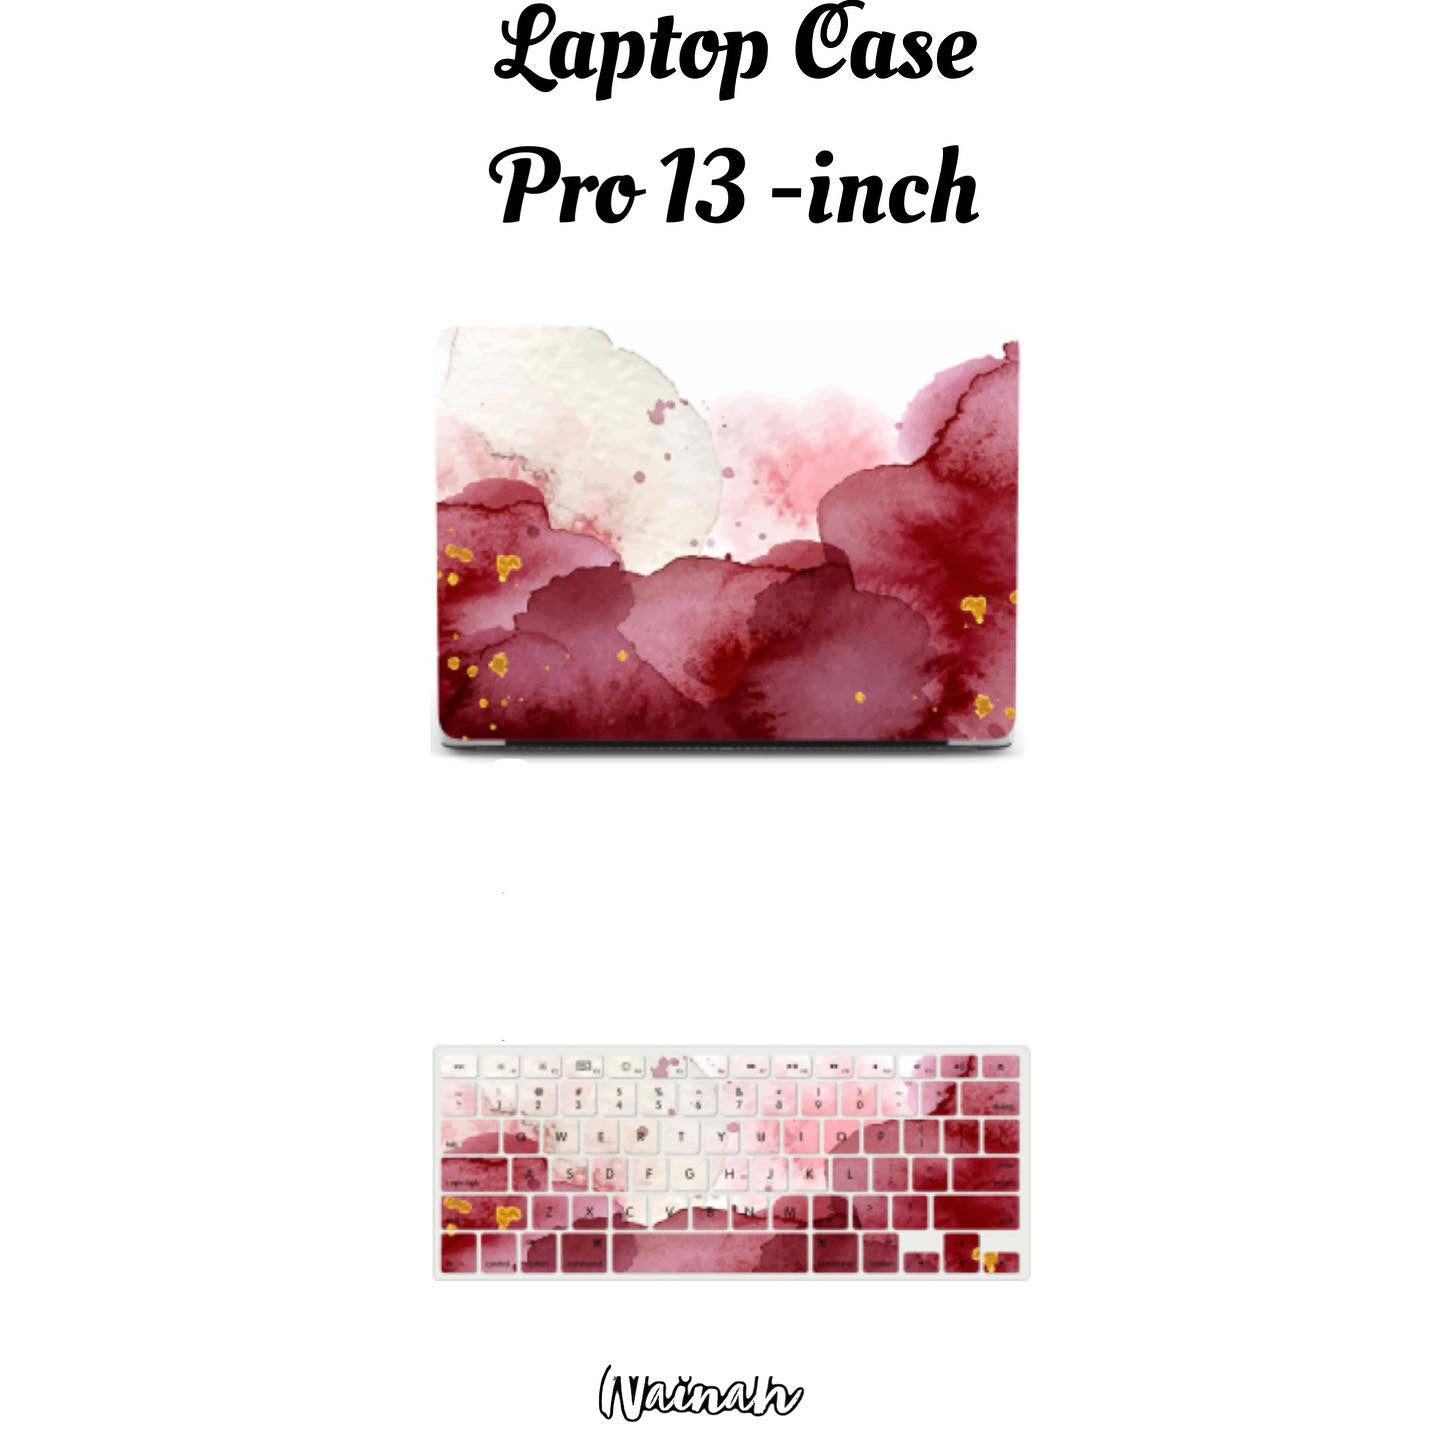 Mac Book Pro 13  A1278 With Apple Logo Cut